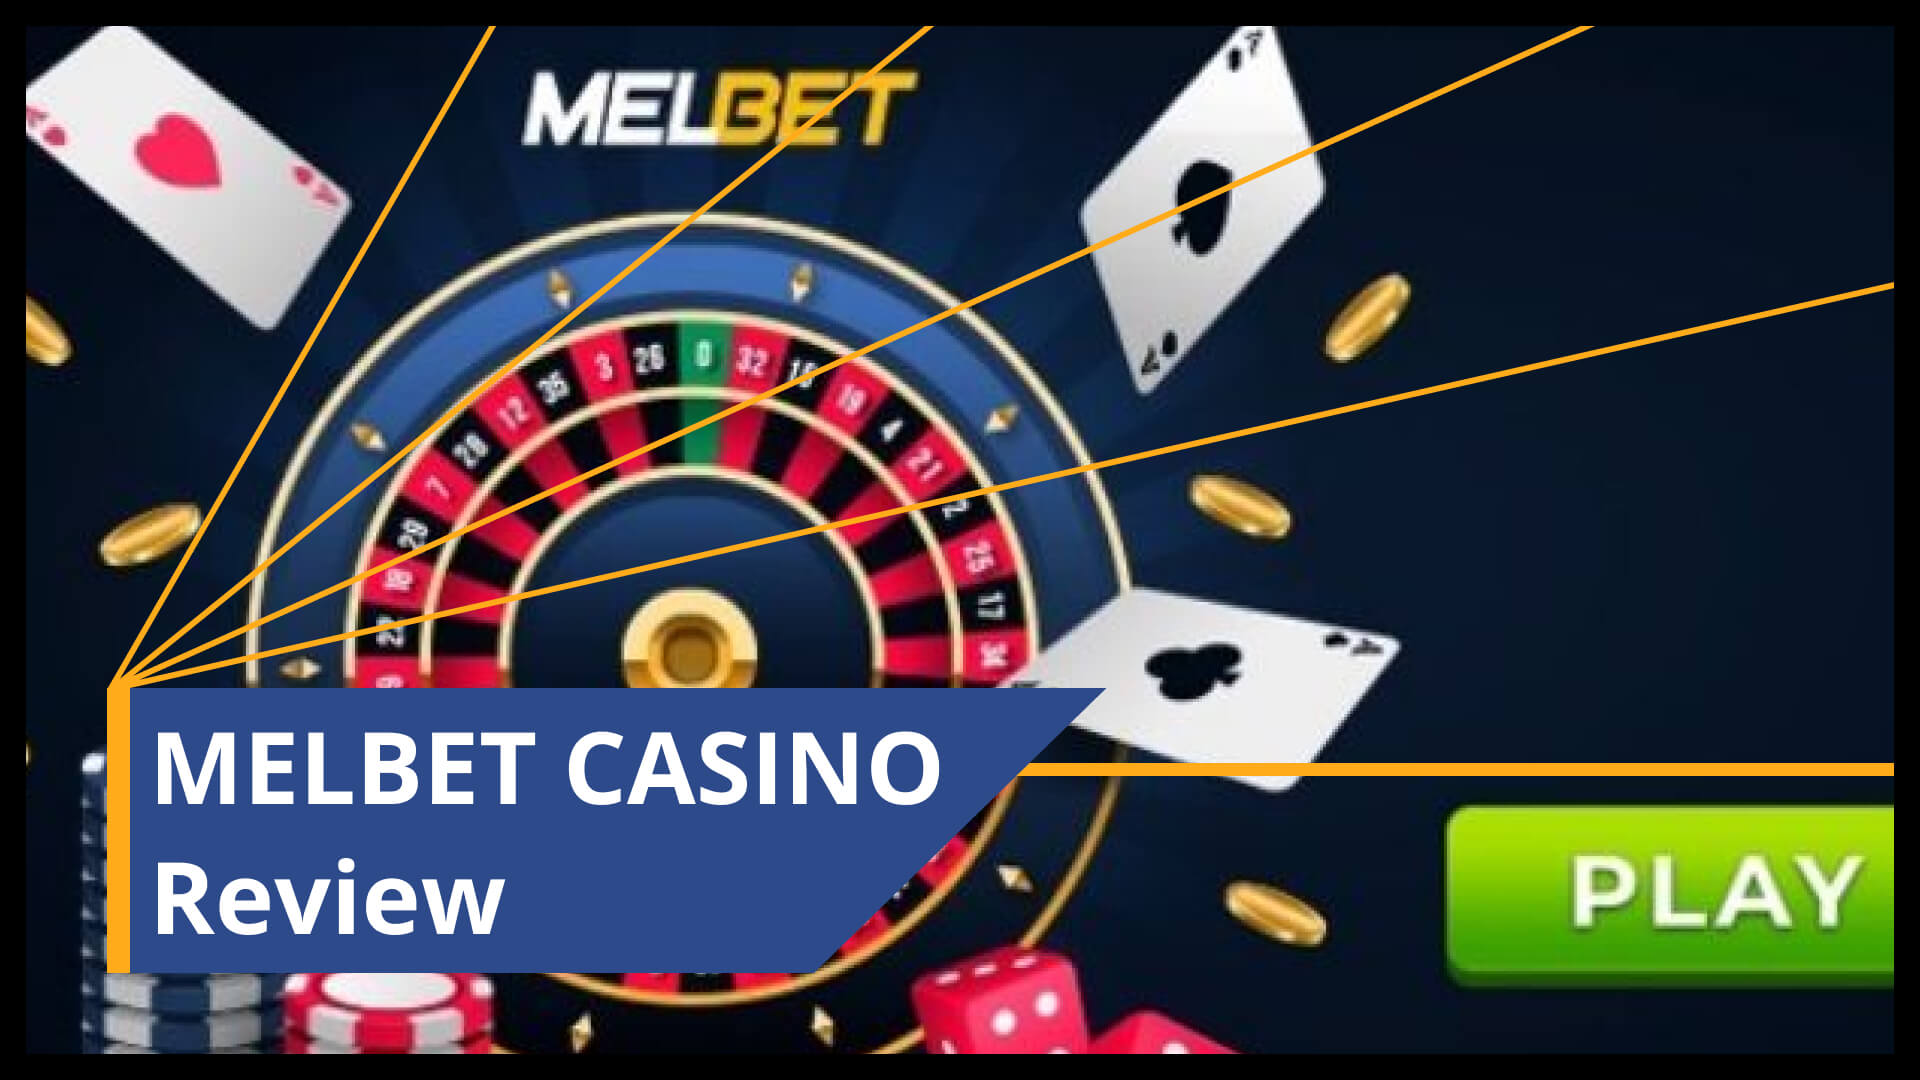 Melbet casino: for those who win big!